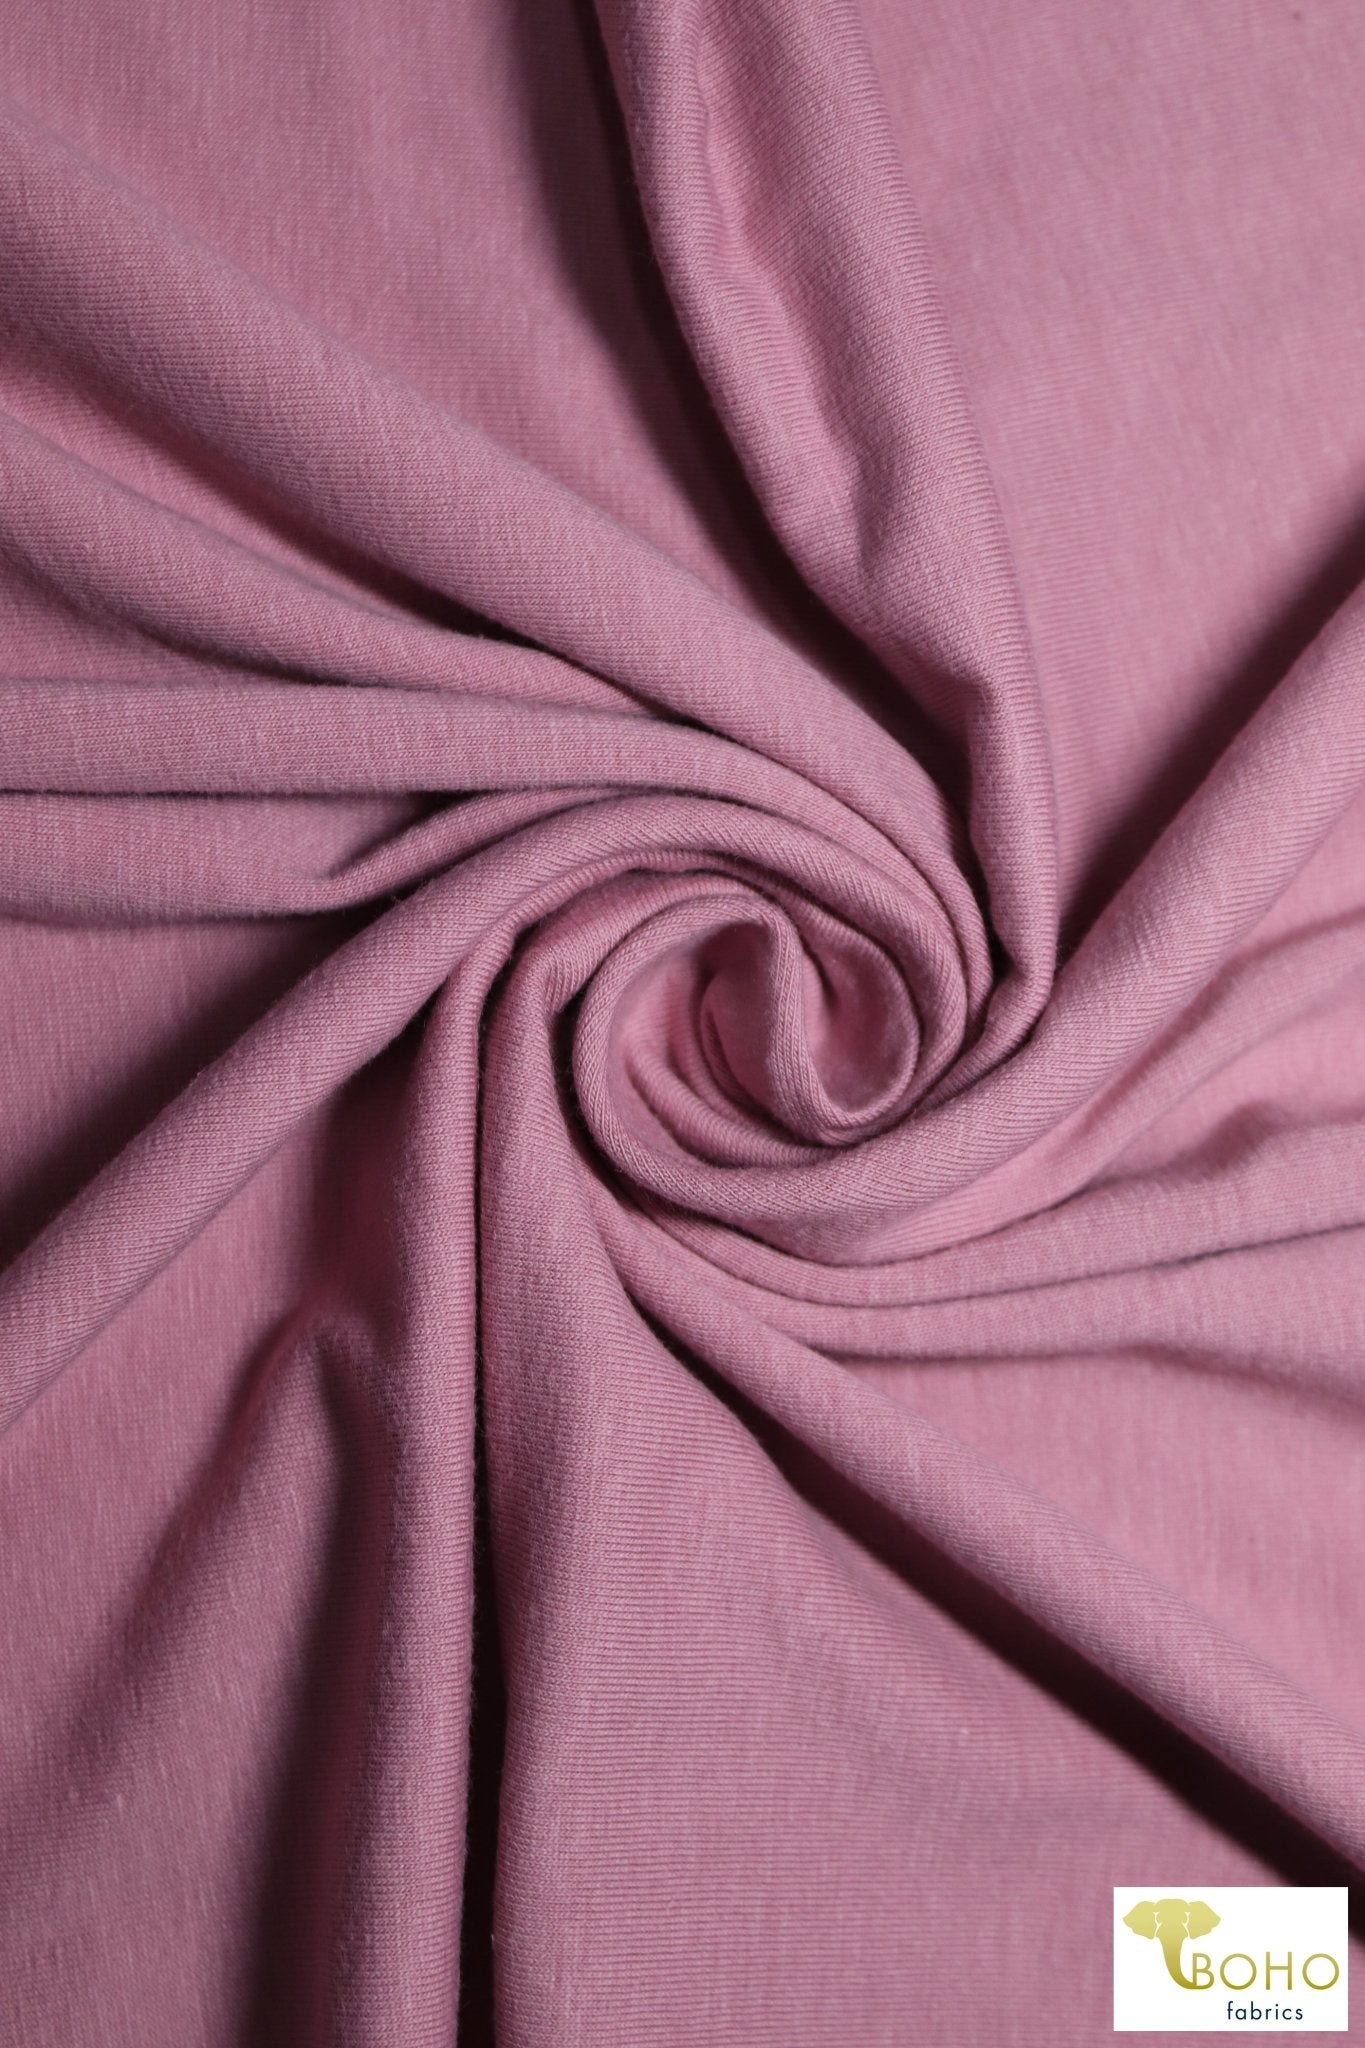 Hydrangea Pink, Cotton Spandex Knit. CLS-108, 8 oz. - Boho Fabrics